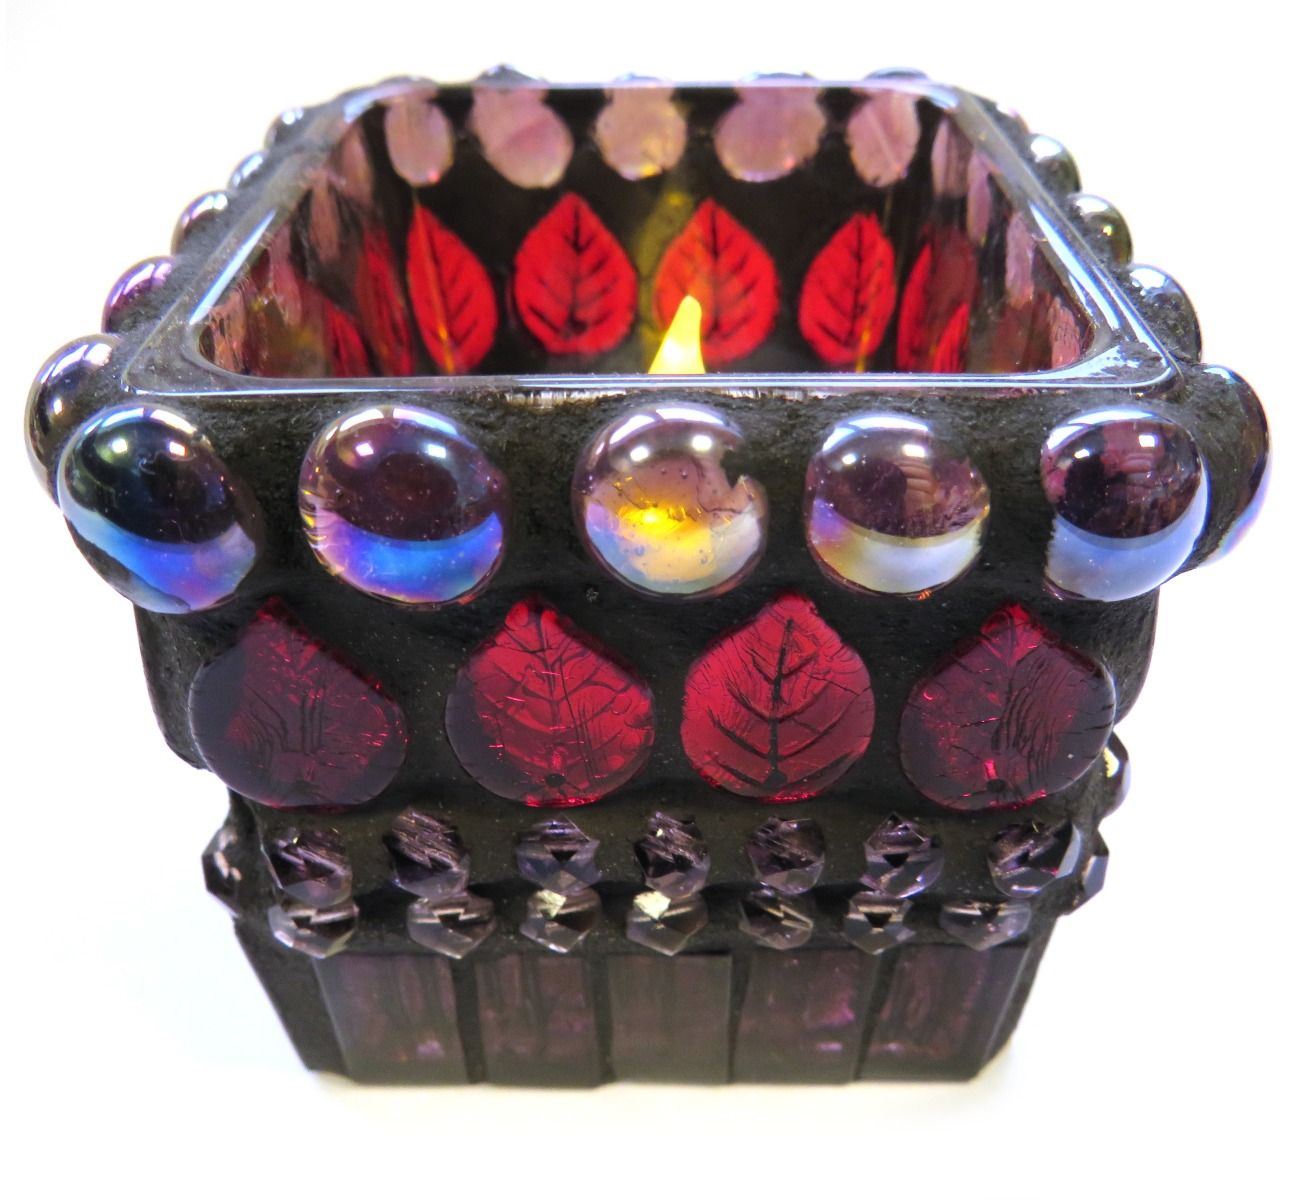 Kit - 2 x Jewel Lights: Red/Violet/Burgundy - *DISCONTINUED*